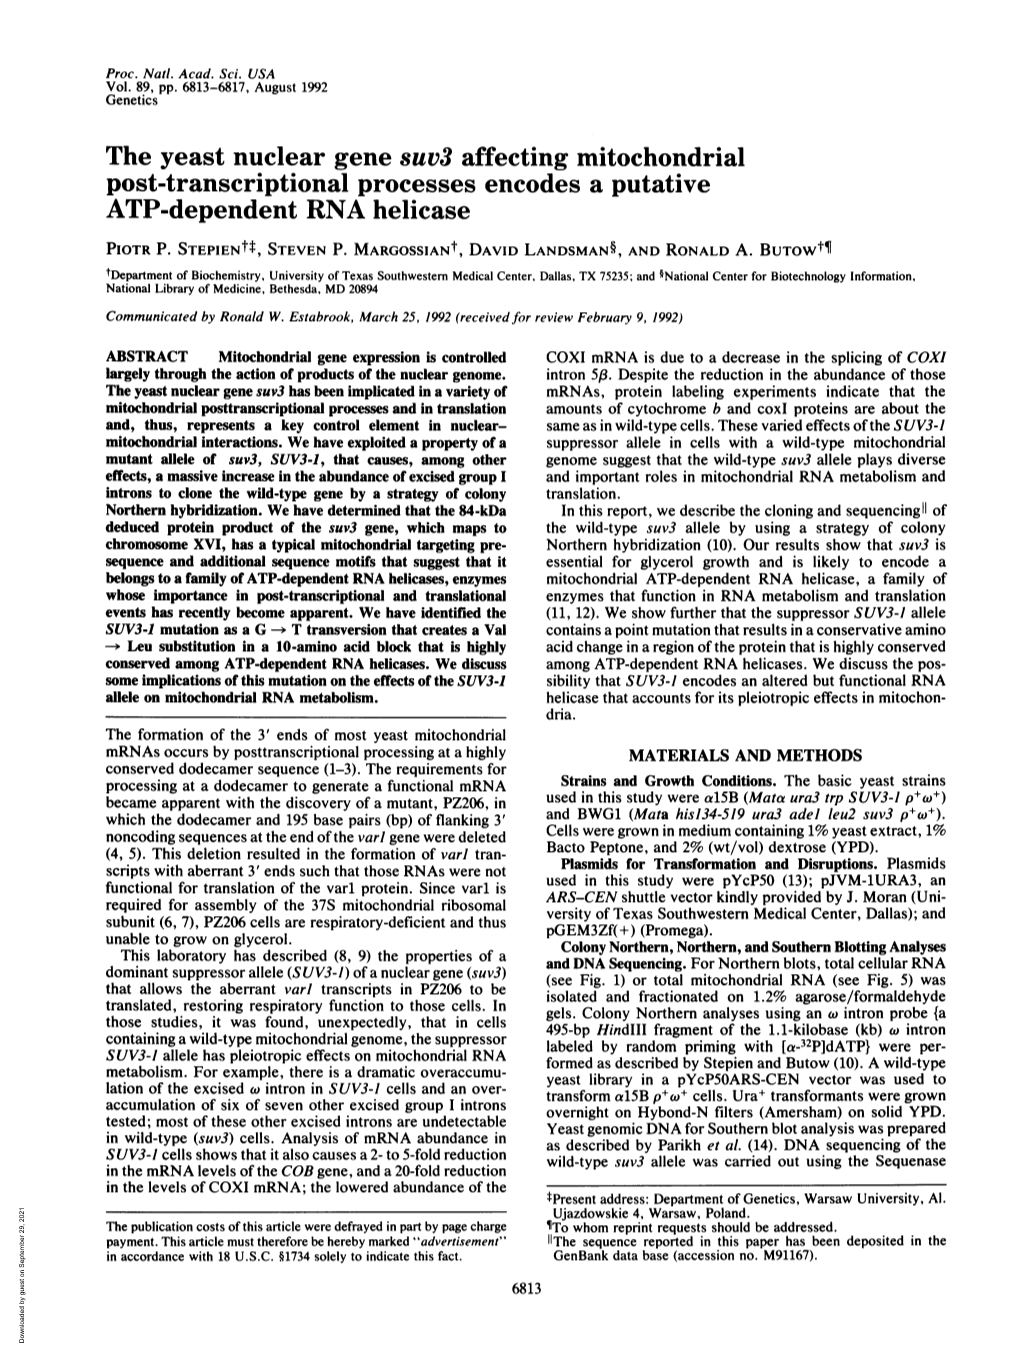 ATP-Dependent RNA Helicase PIOTR P